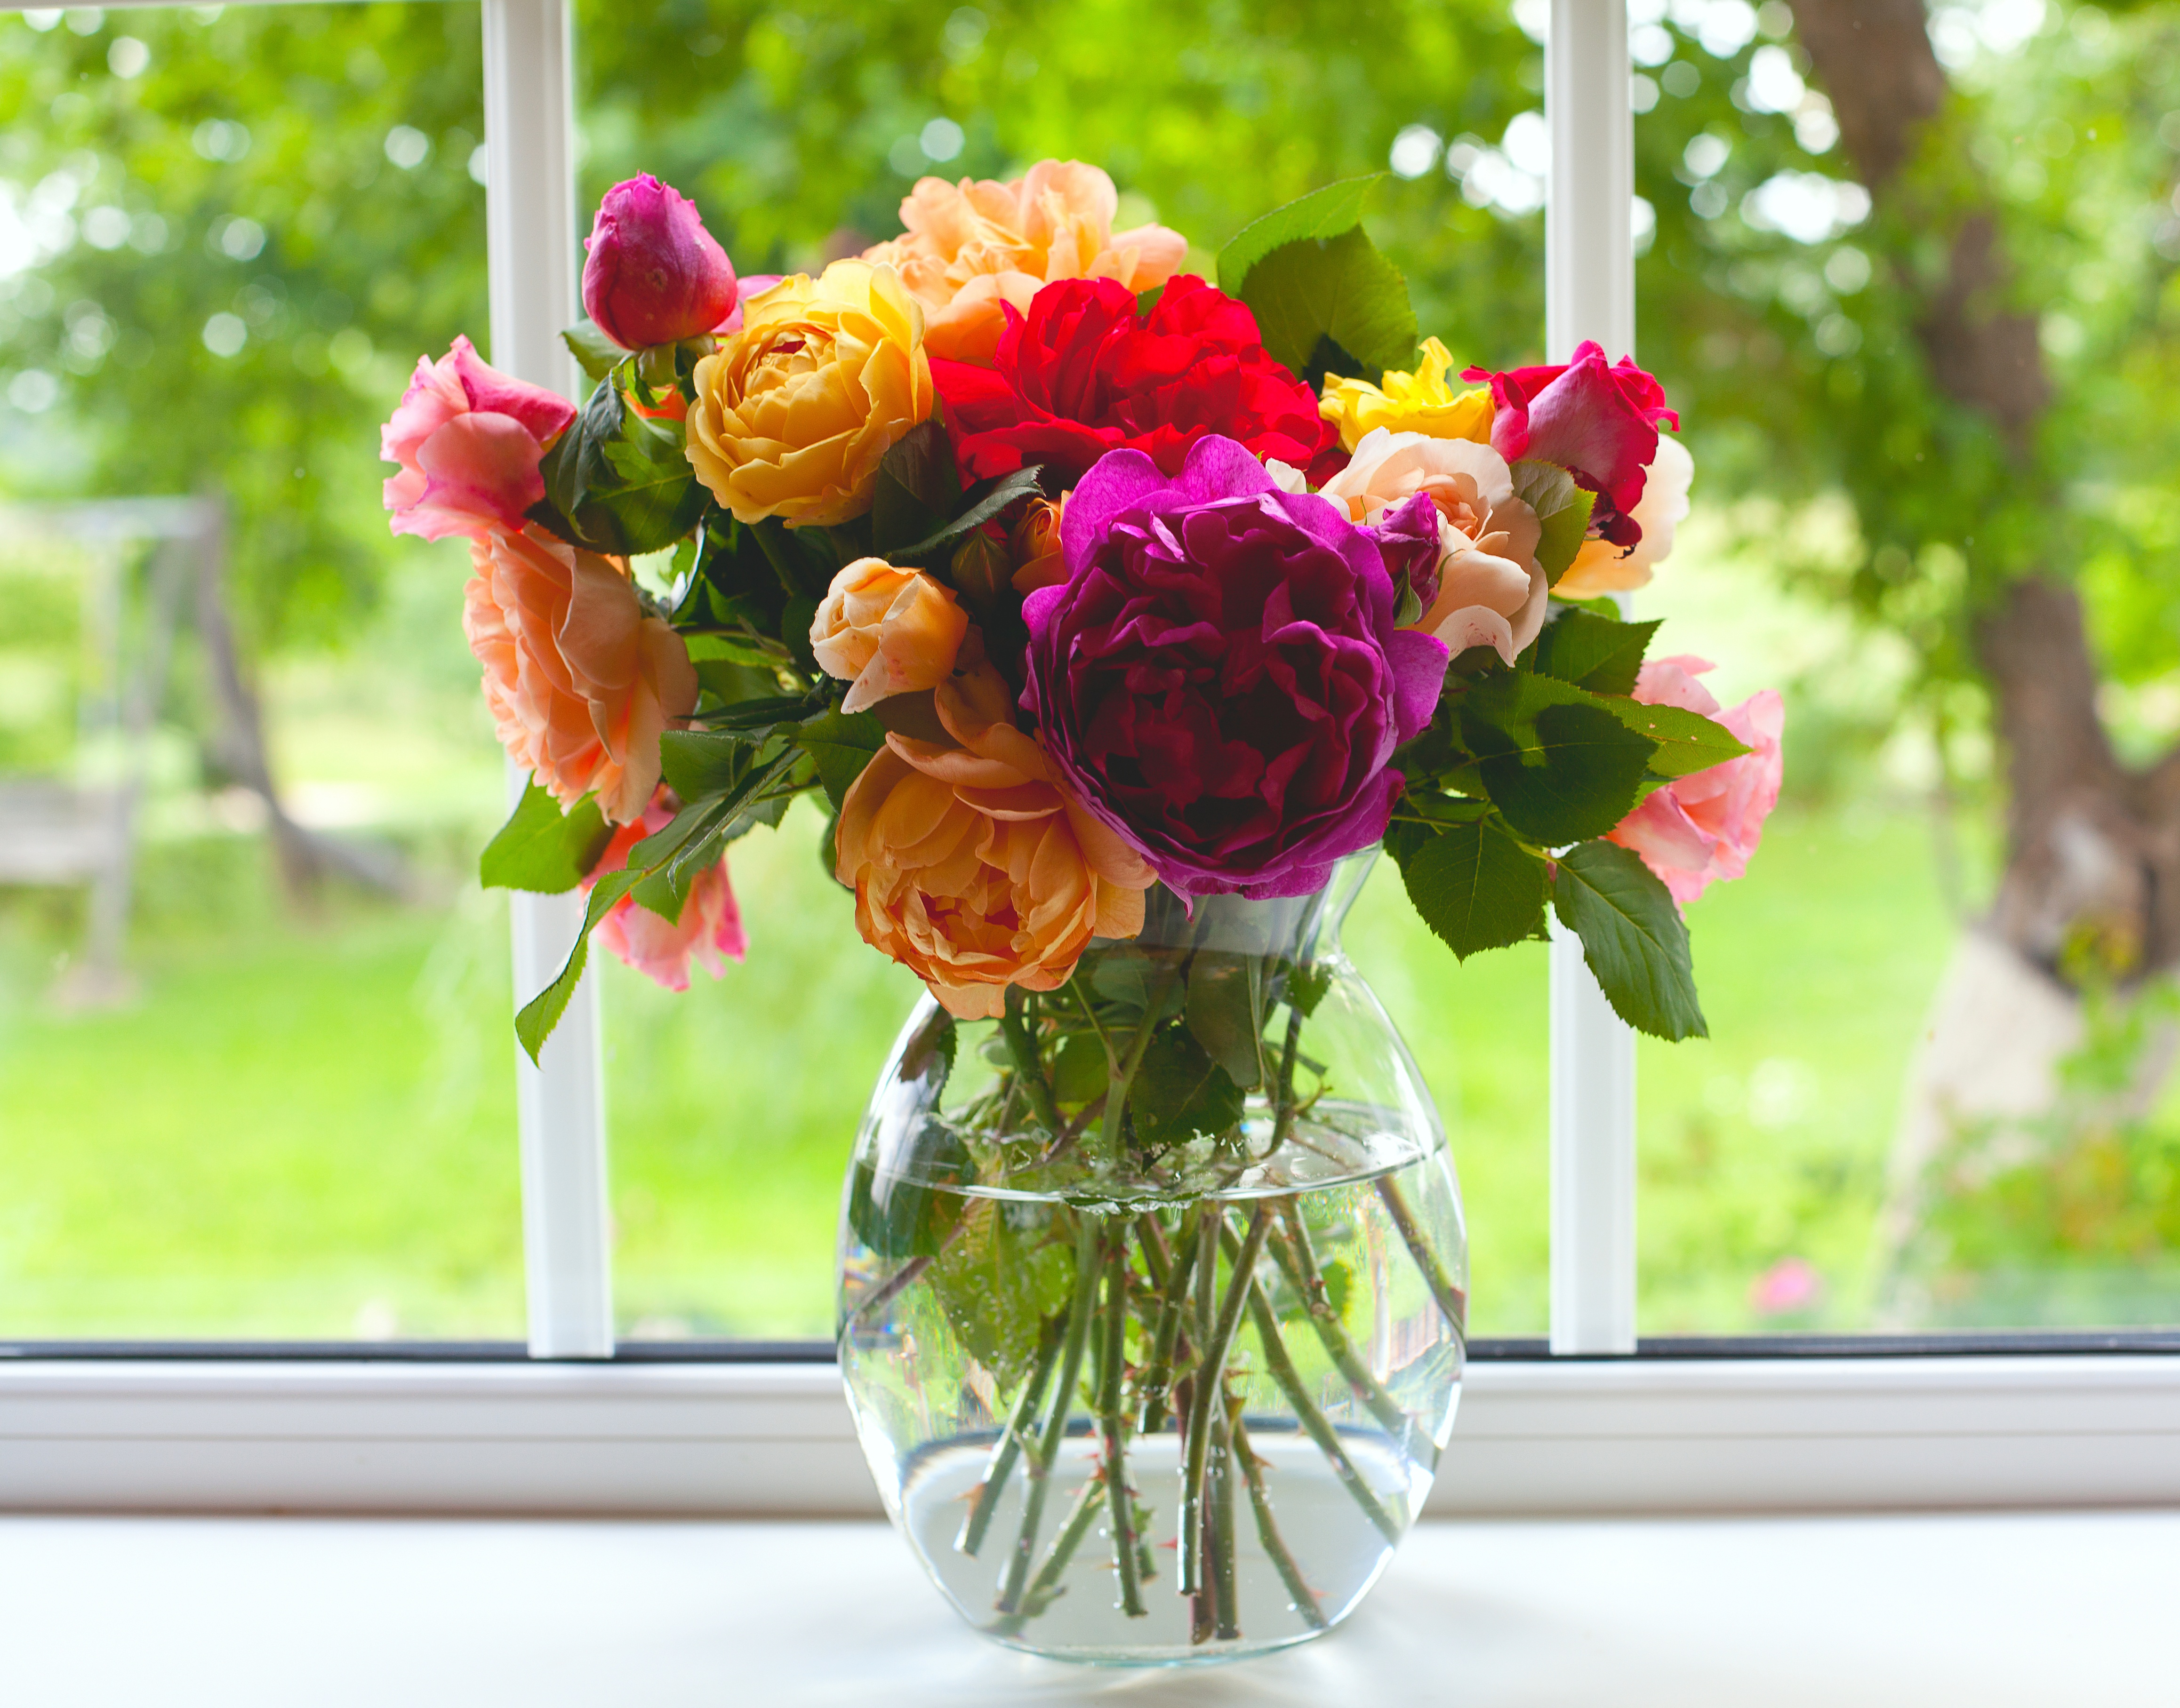 Букеты роз в вазе на столе. Цветы в вазе. Цветц в впзн. Шикарные цветы в вазе. Цветочки в вазе.